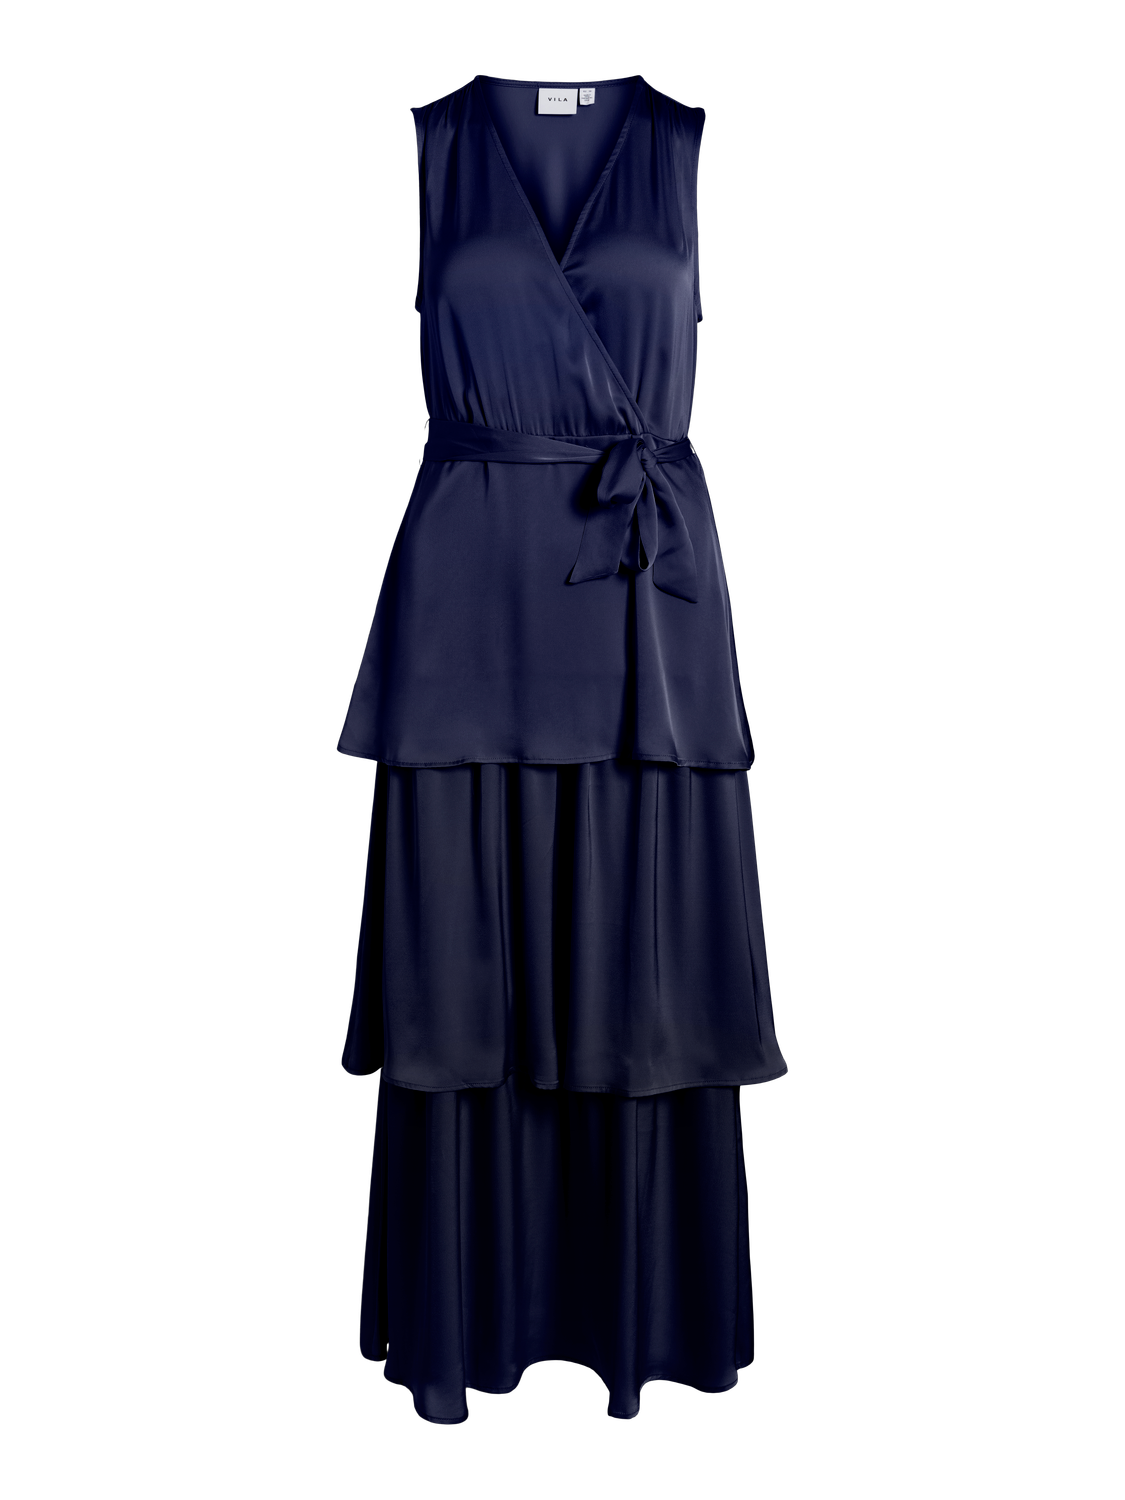 VIENNA Dress - Navy Blazer